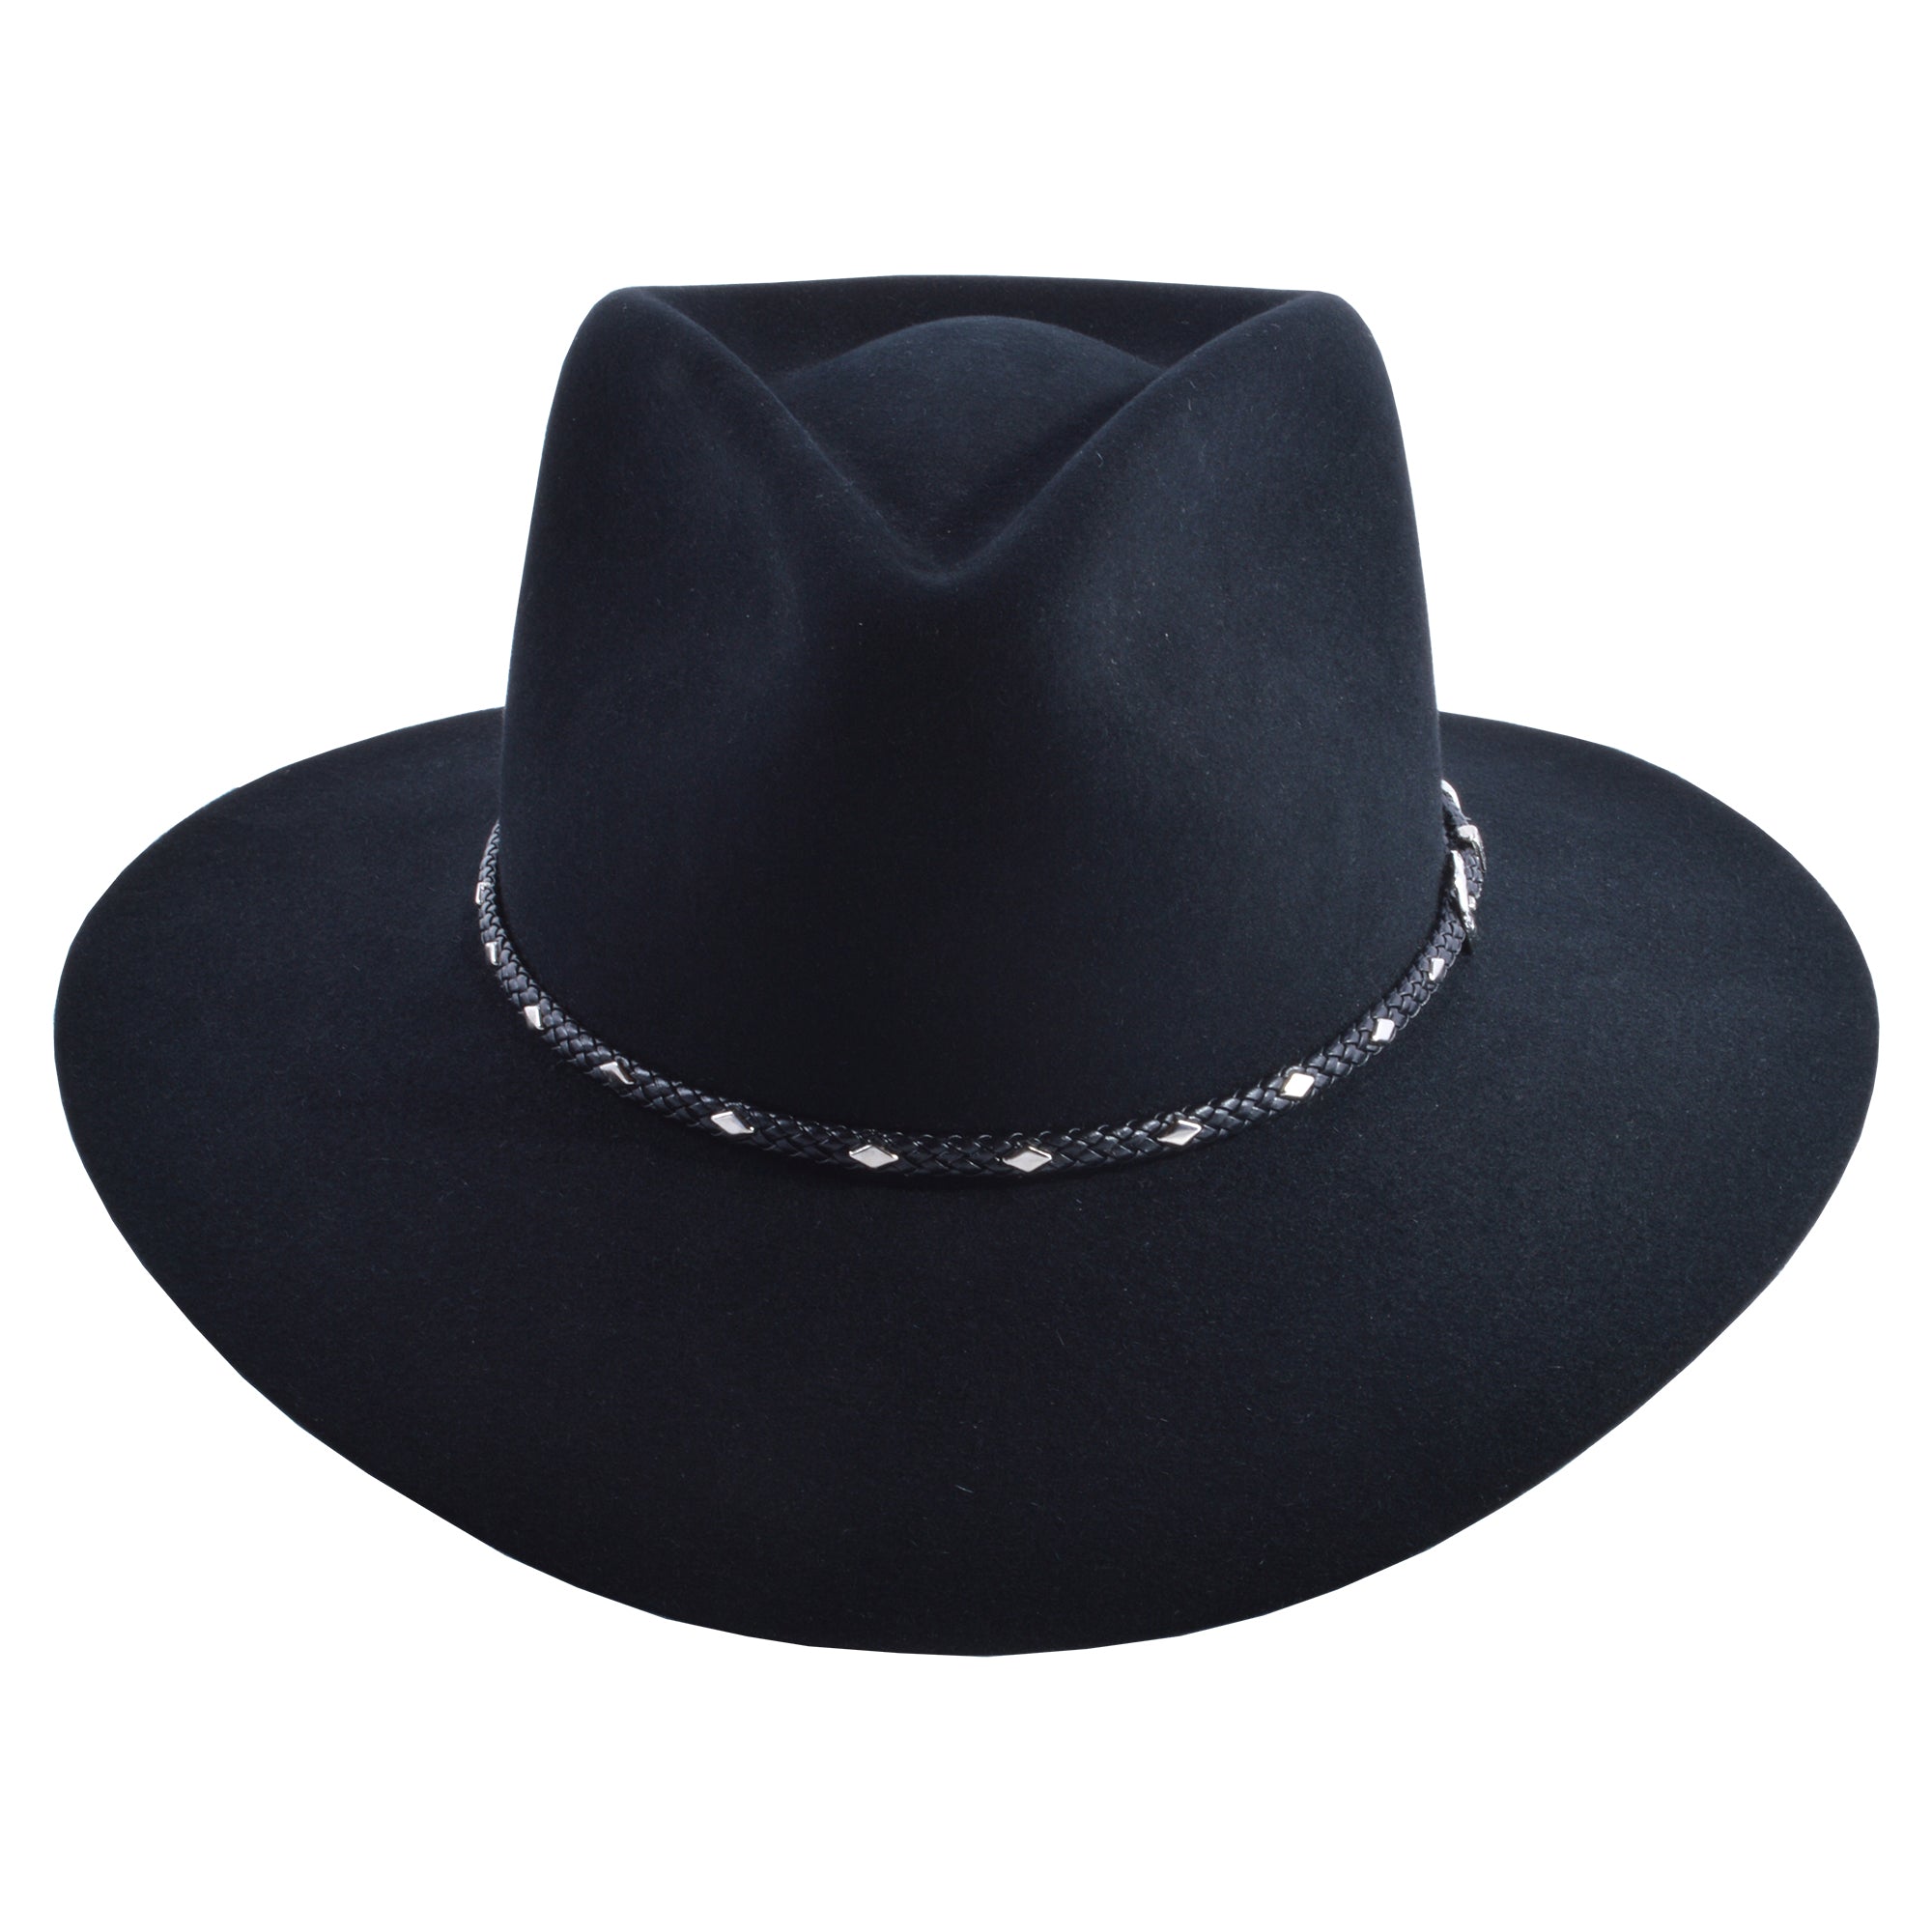 Stetson 5X Fur Felt Diamond Jim Hat with Hat Box - 0